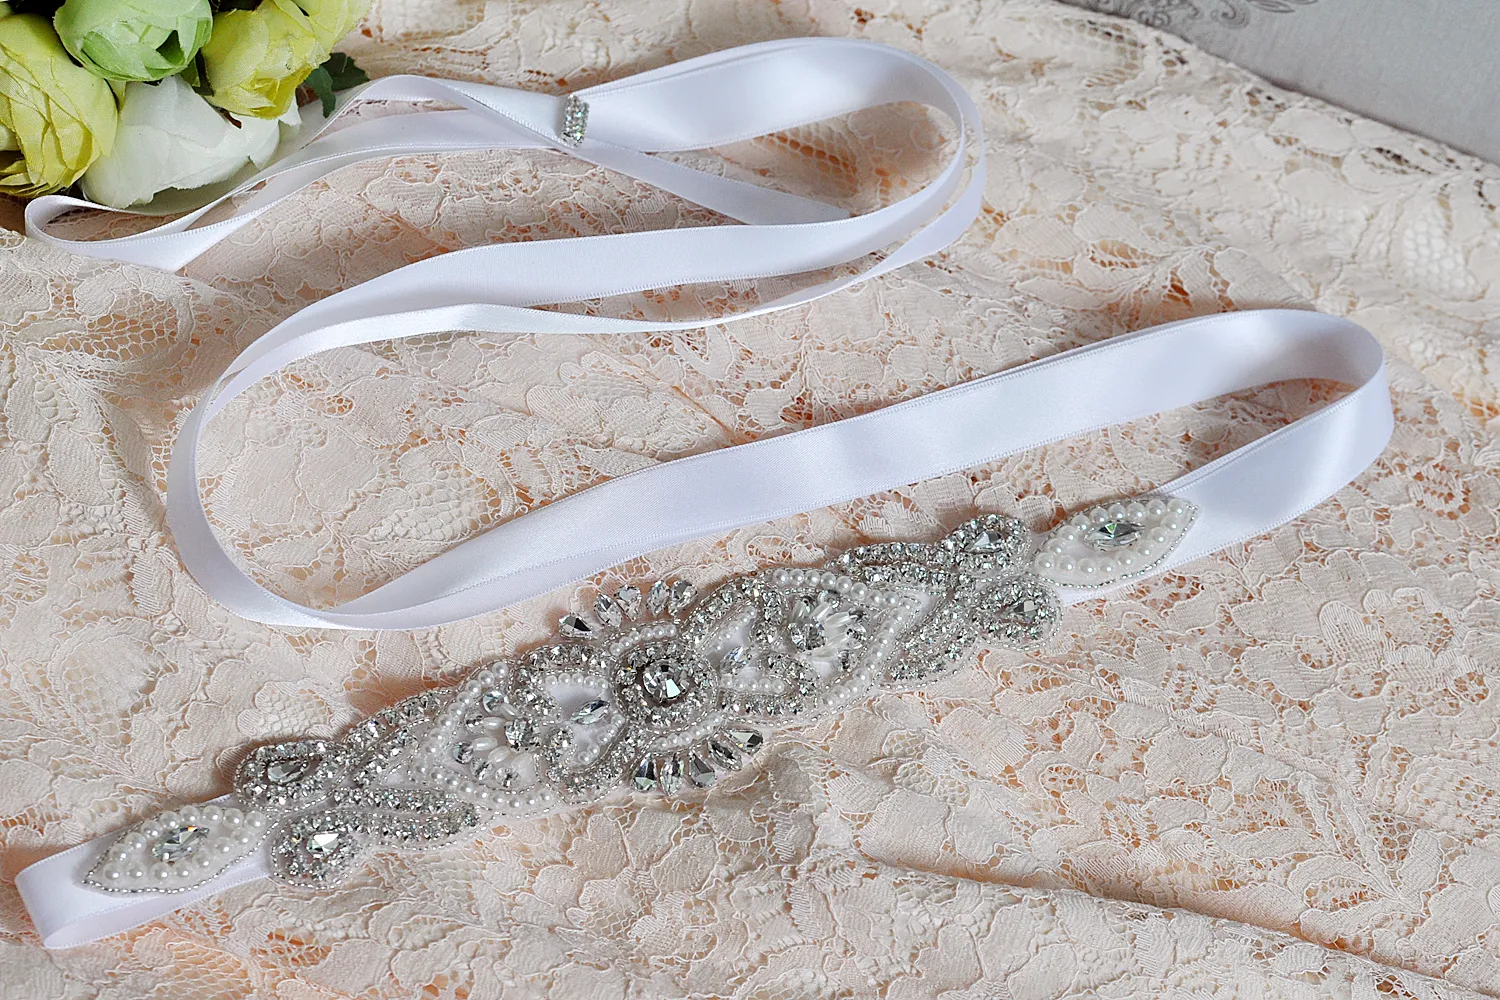 In Stock rhinestone wedding sash 55cm x 28cm Length crystal Beaded For Wedding Dress Bridesmaid belt bridal sash For Evening Prom9425181